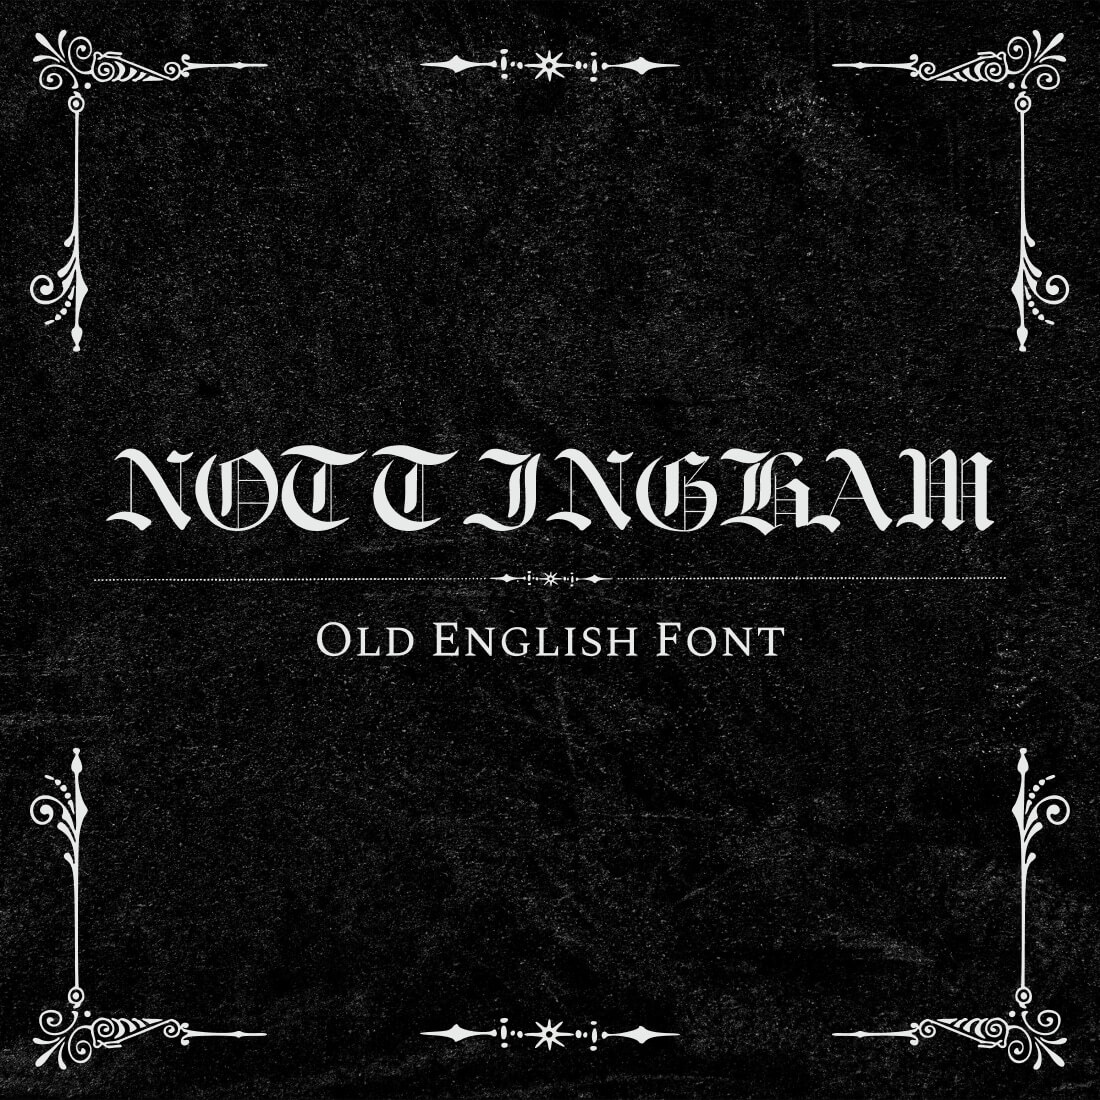 Nottingham Old English Font cover image.